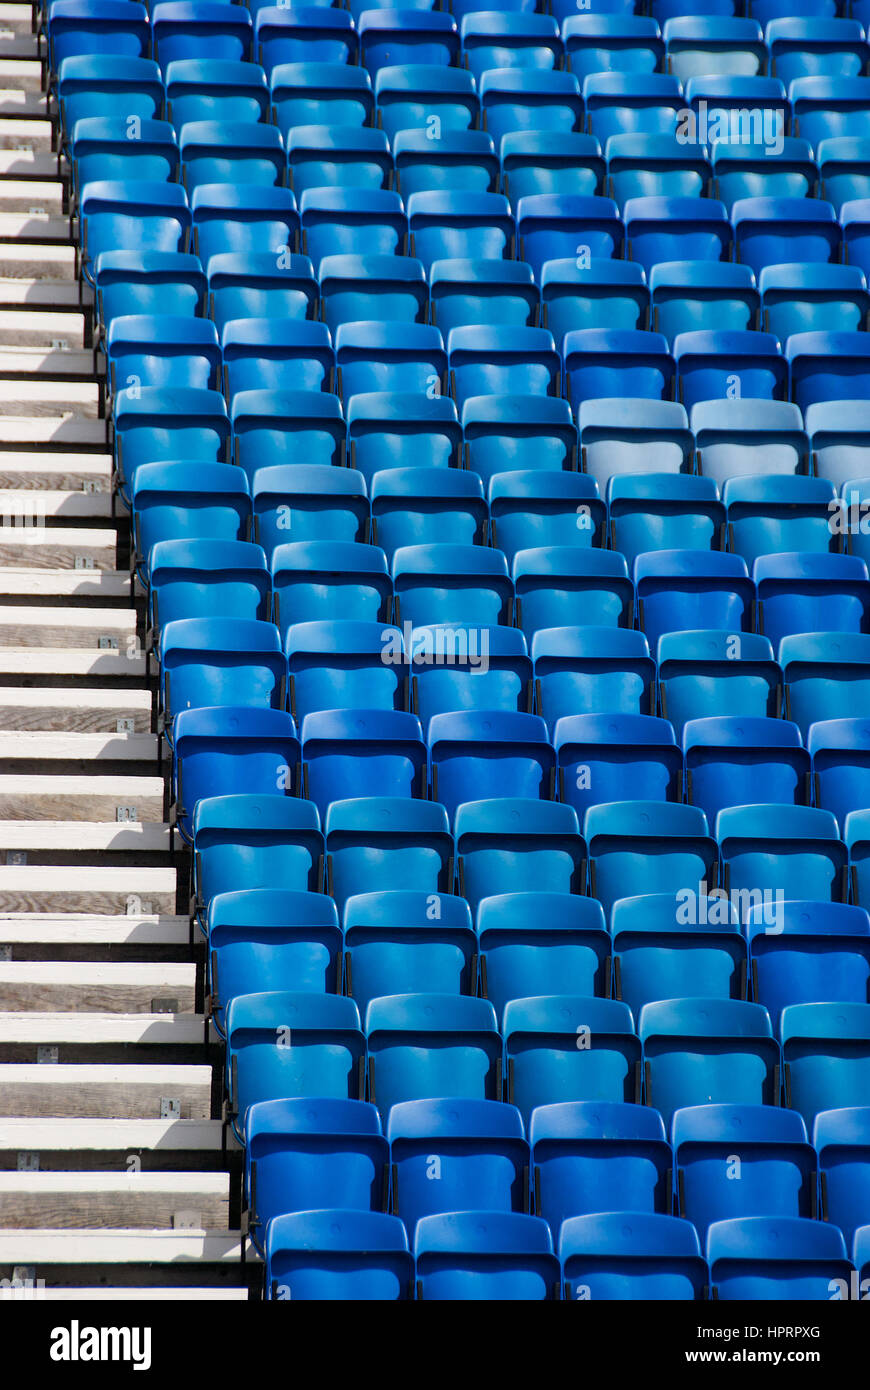 Blue seats for an event in Edinburgh, Scotland Stock Photo